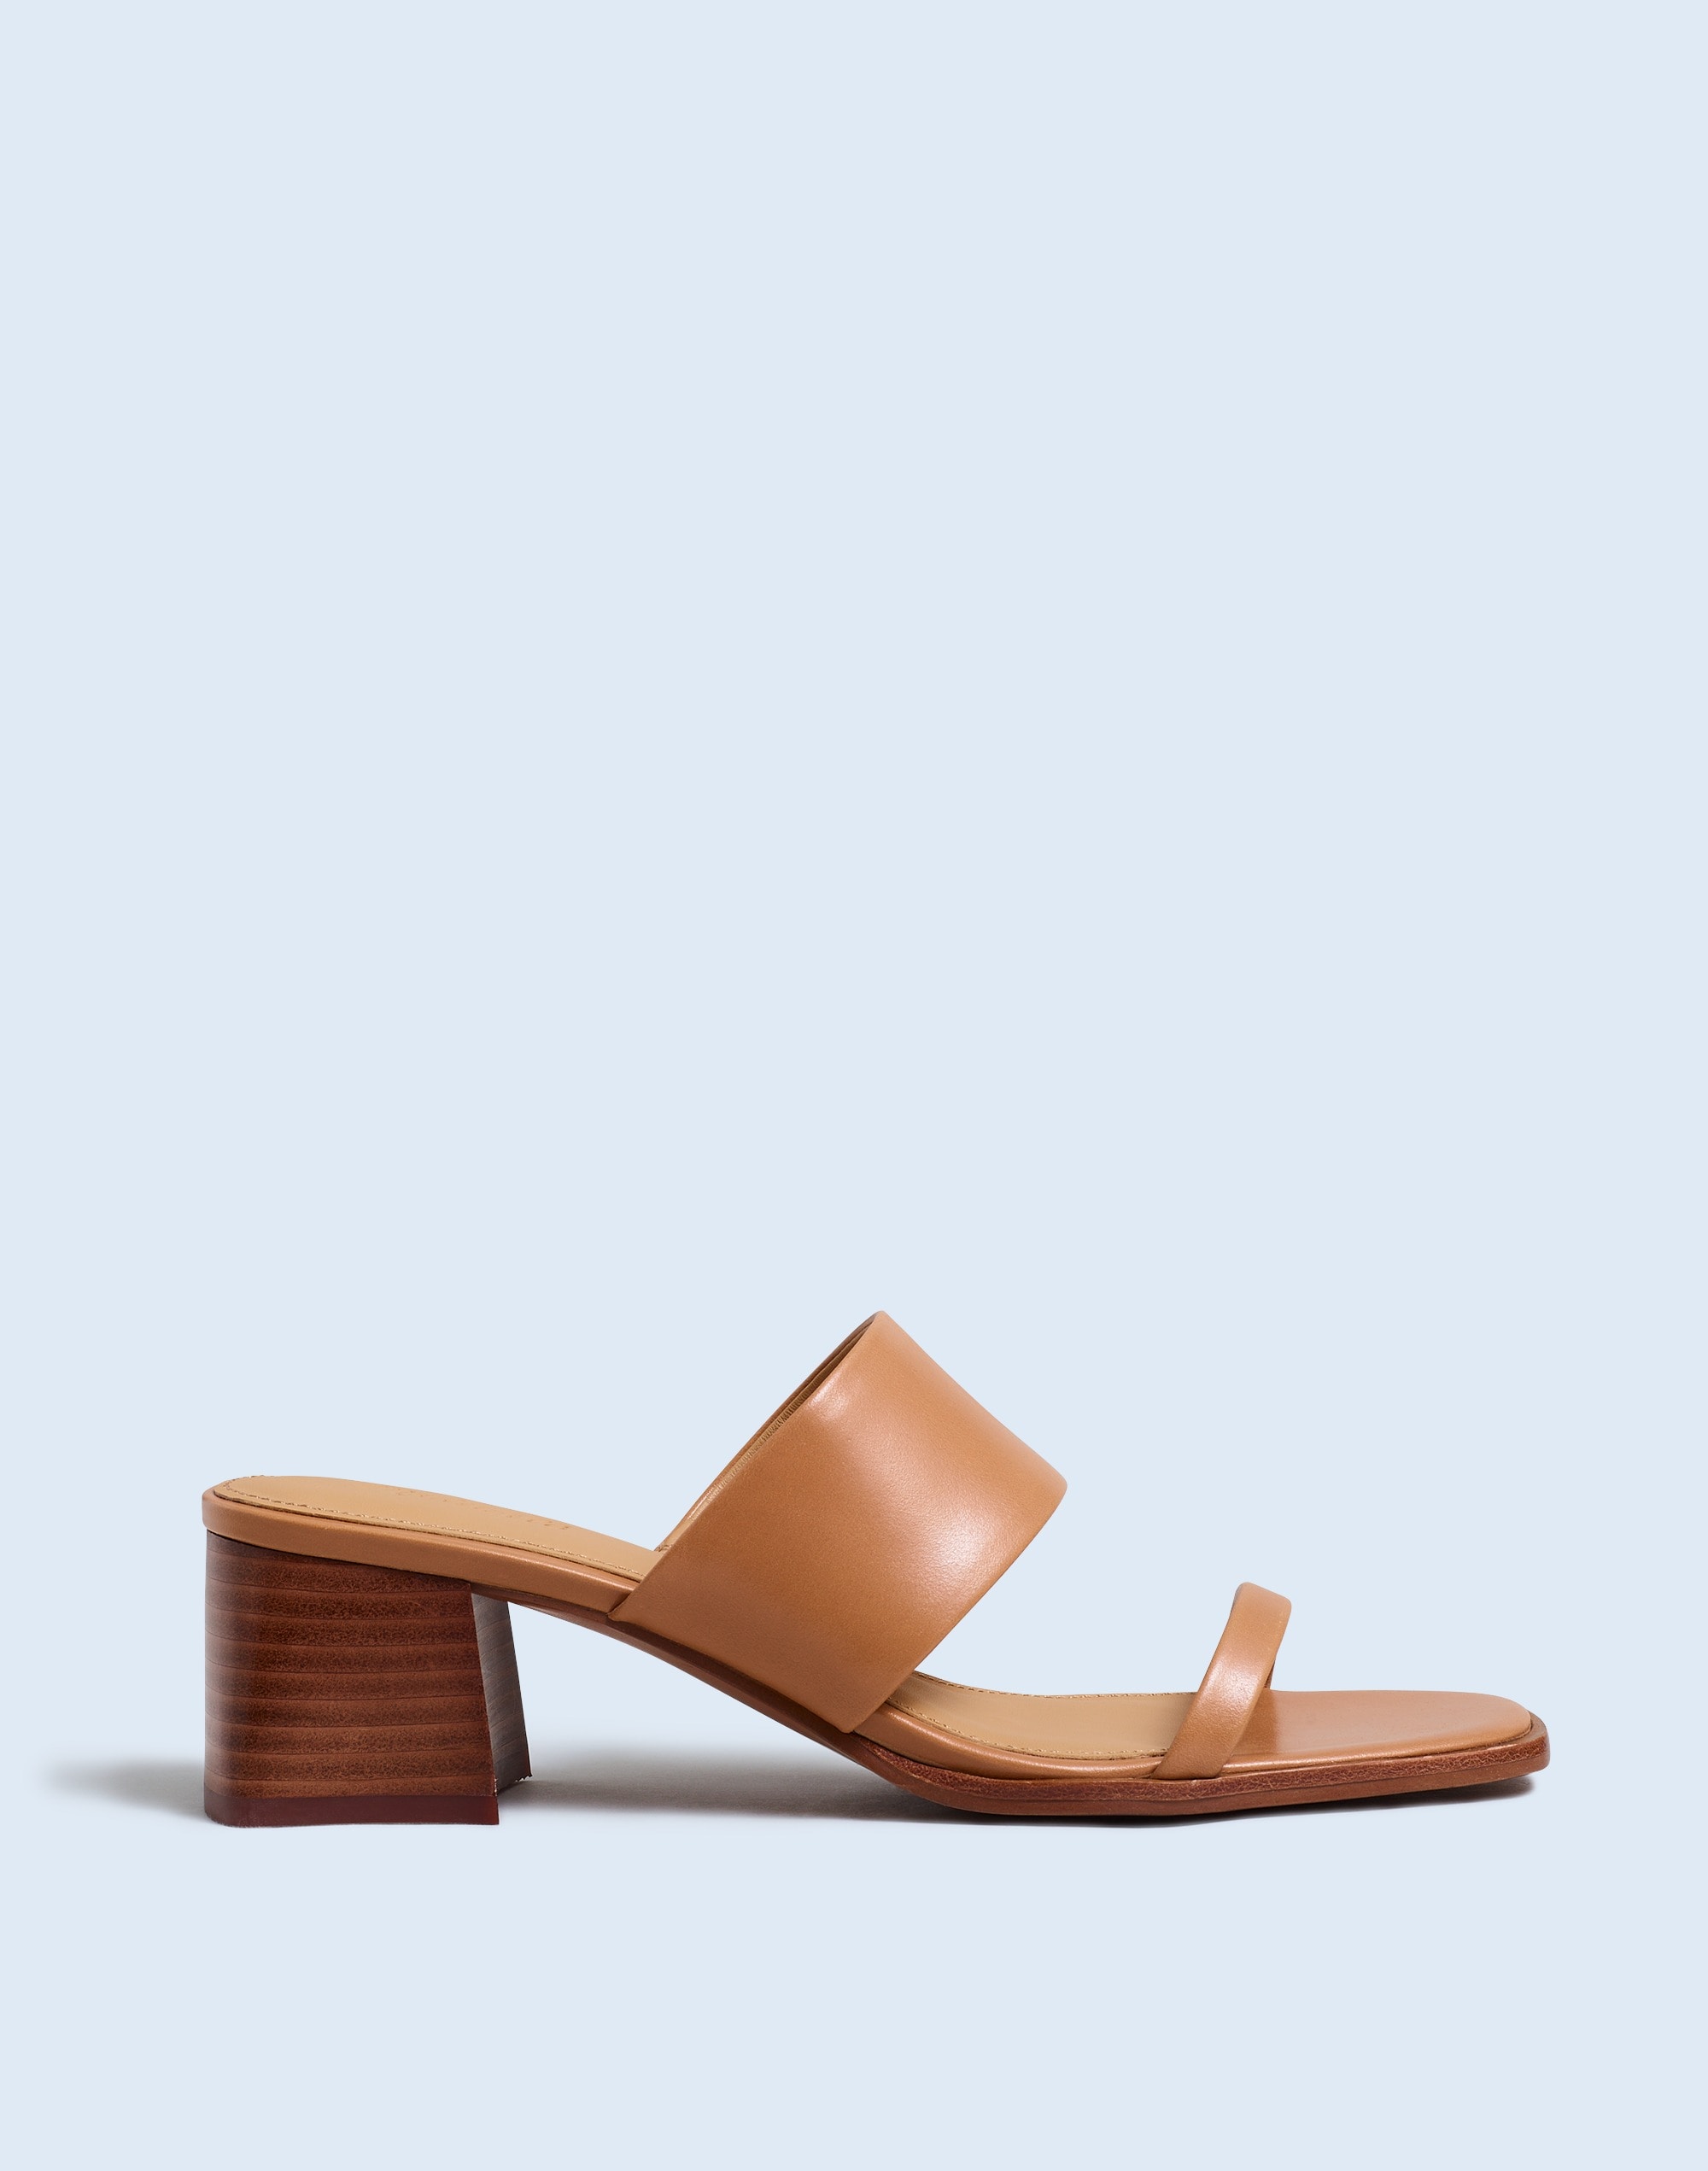 The Kaitlin Sandal Shiny Leather